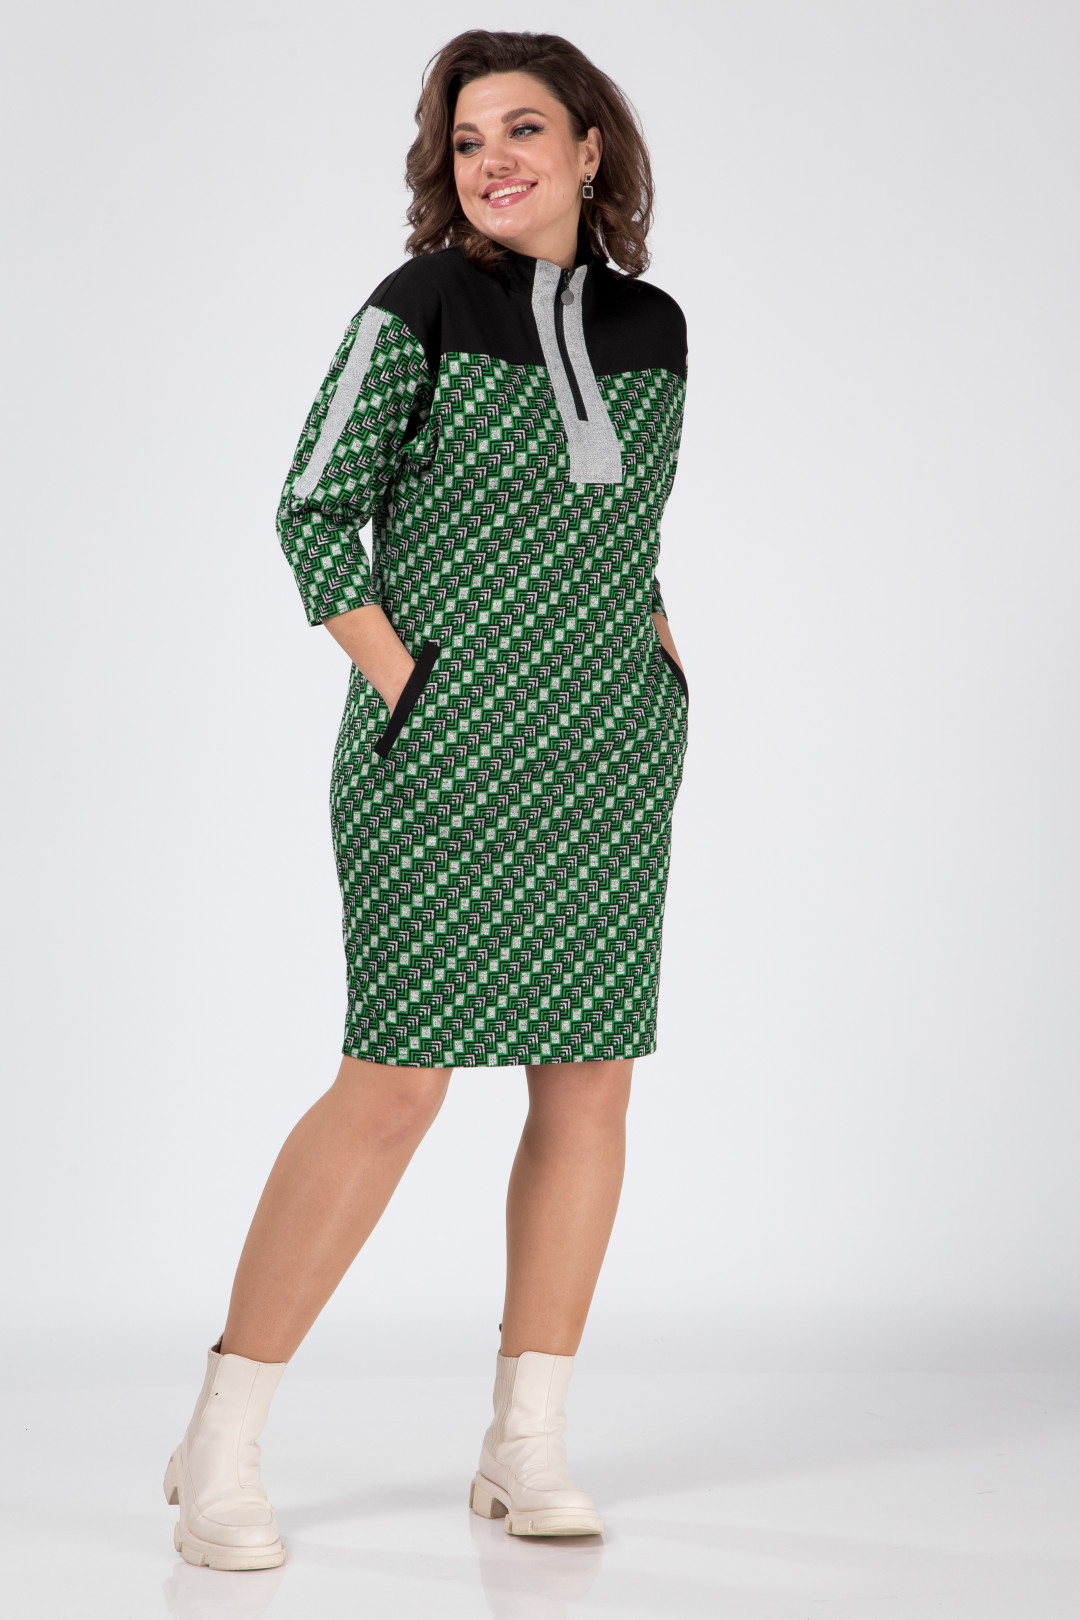 Платье Карина Делюкс М-1077 зелёный